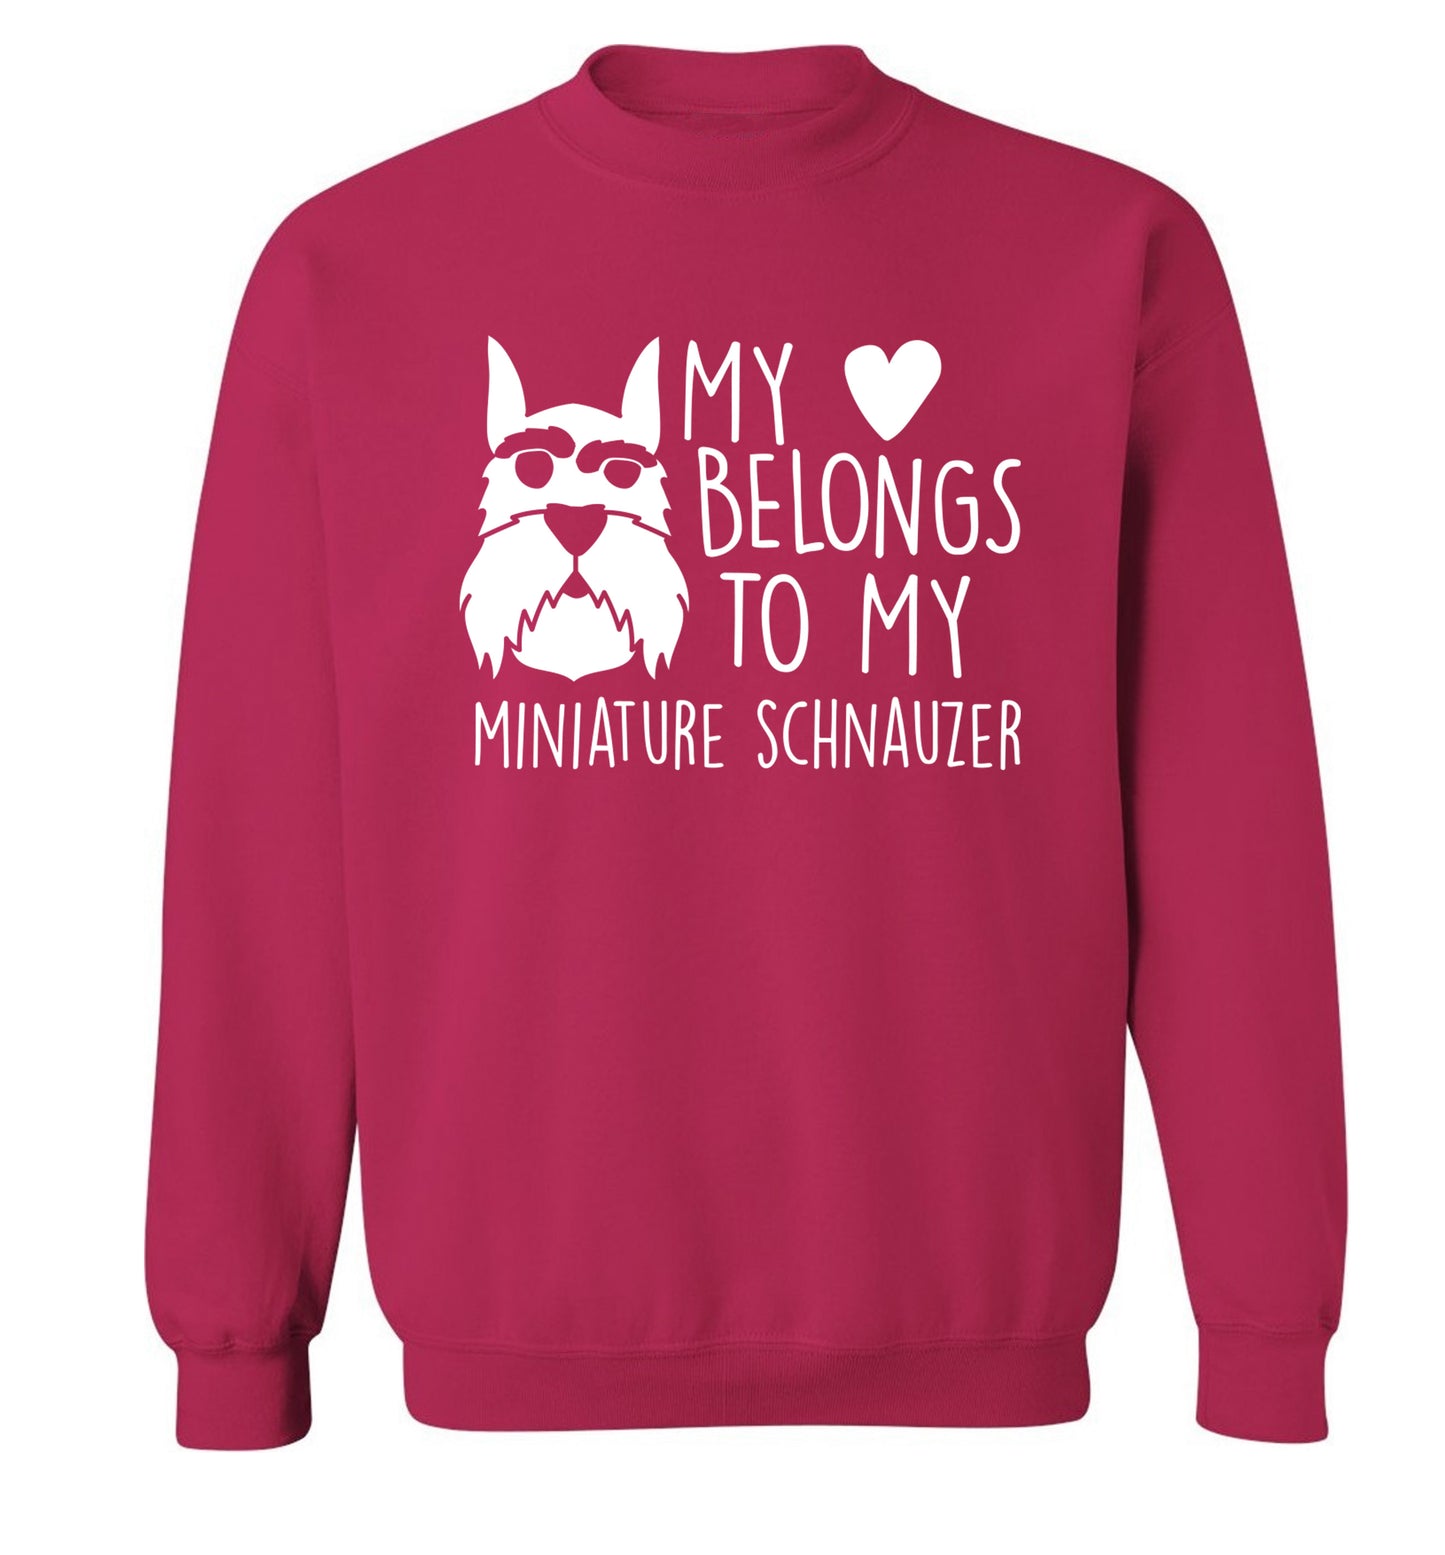 My heart belongs to my miniature schnauzer Adult's unisex pink Sweater 2XL